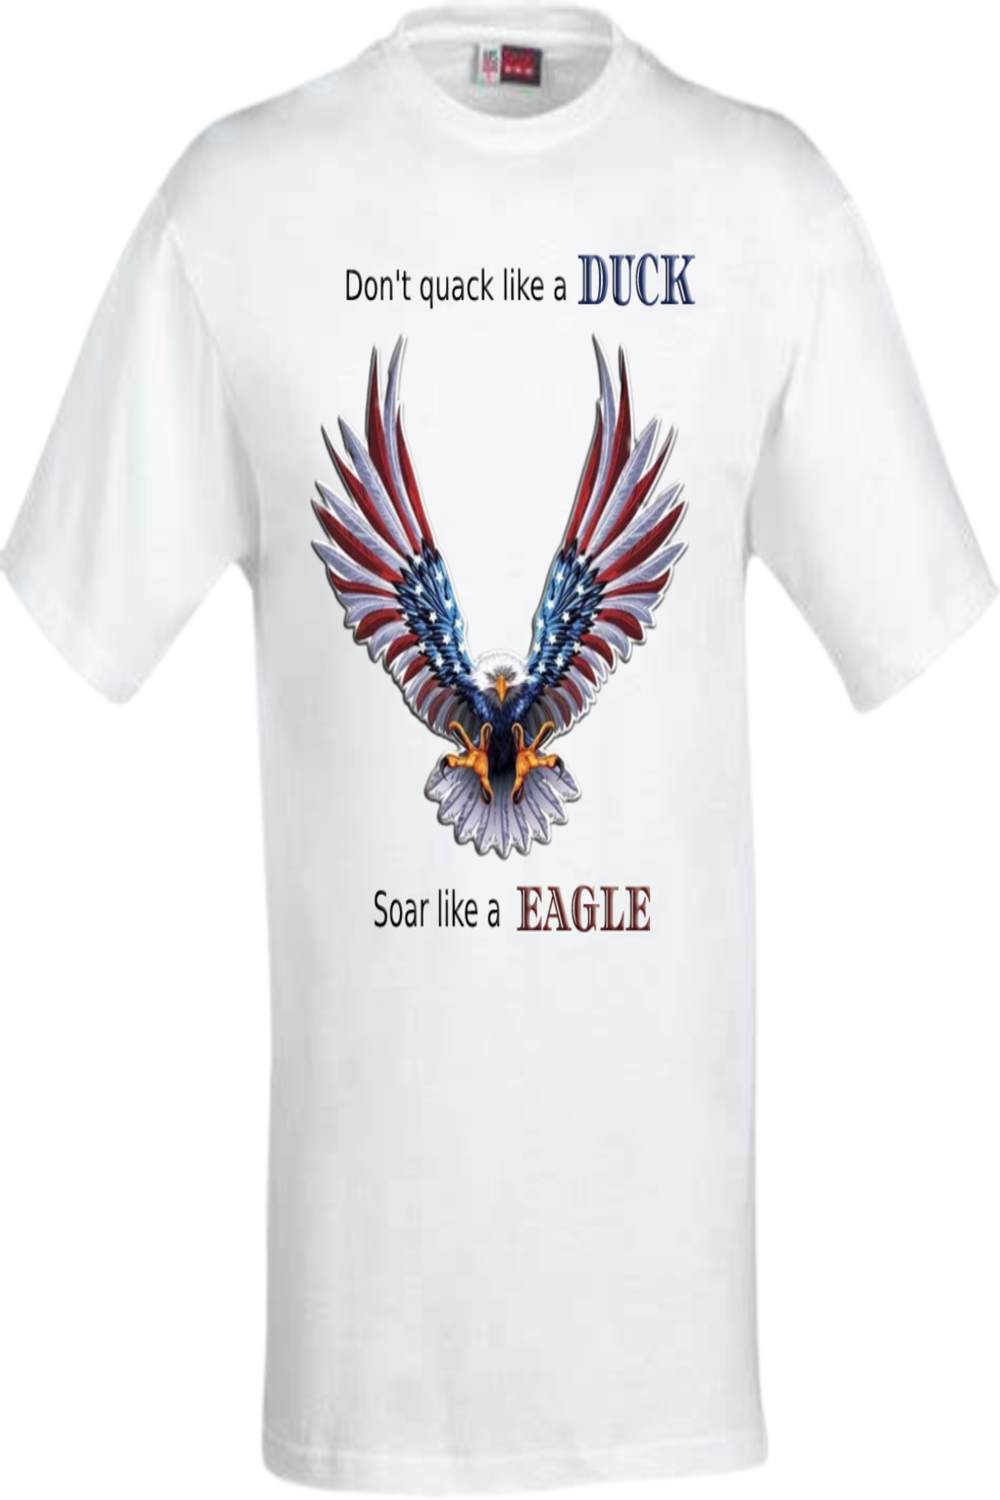 Colourful Eagle T-shirt Design Template